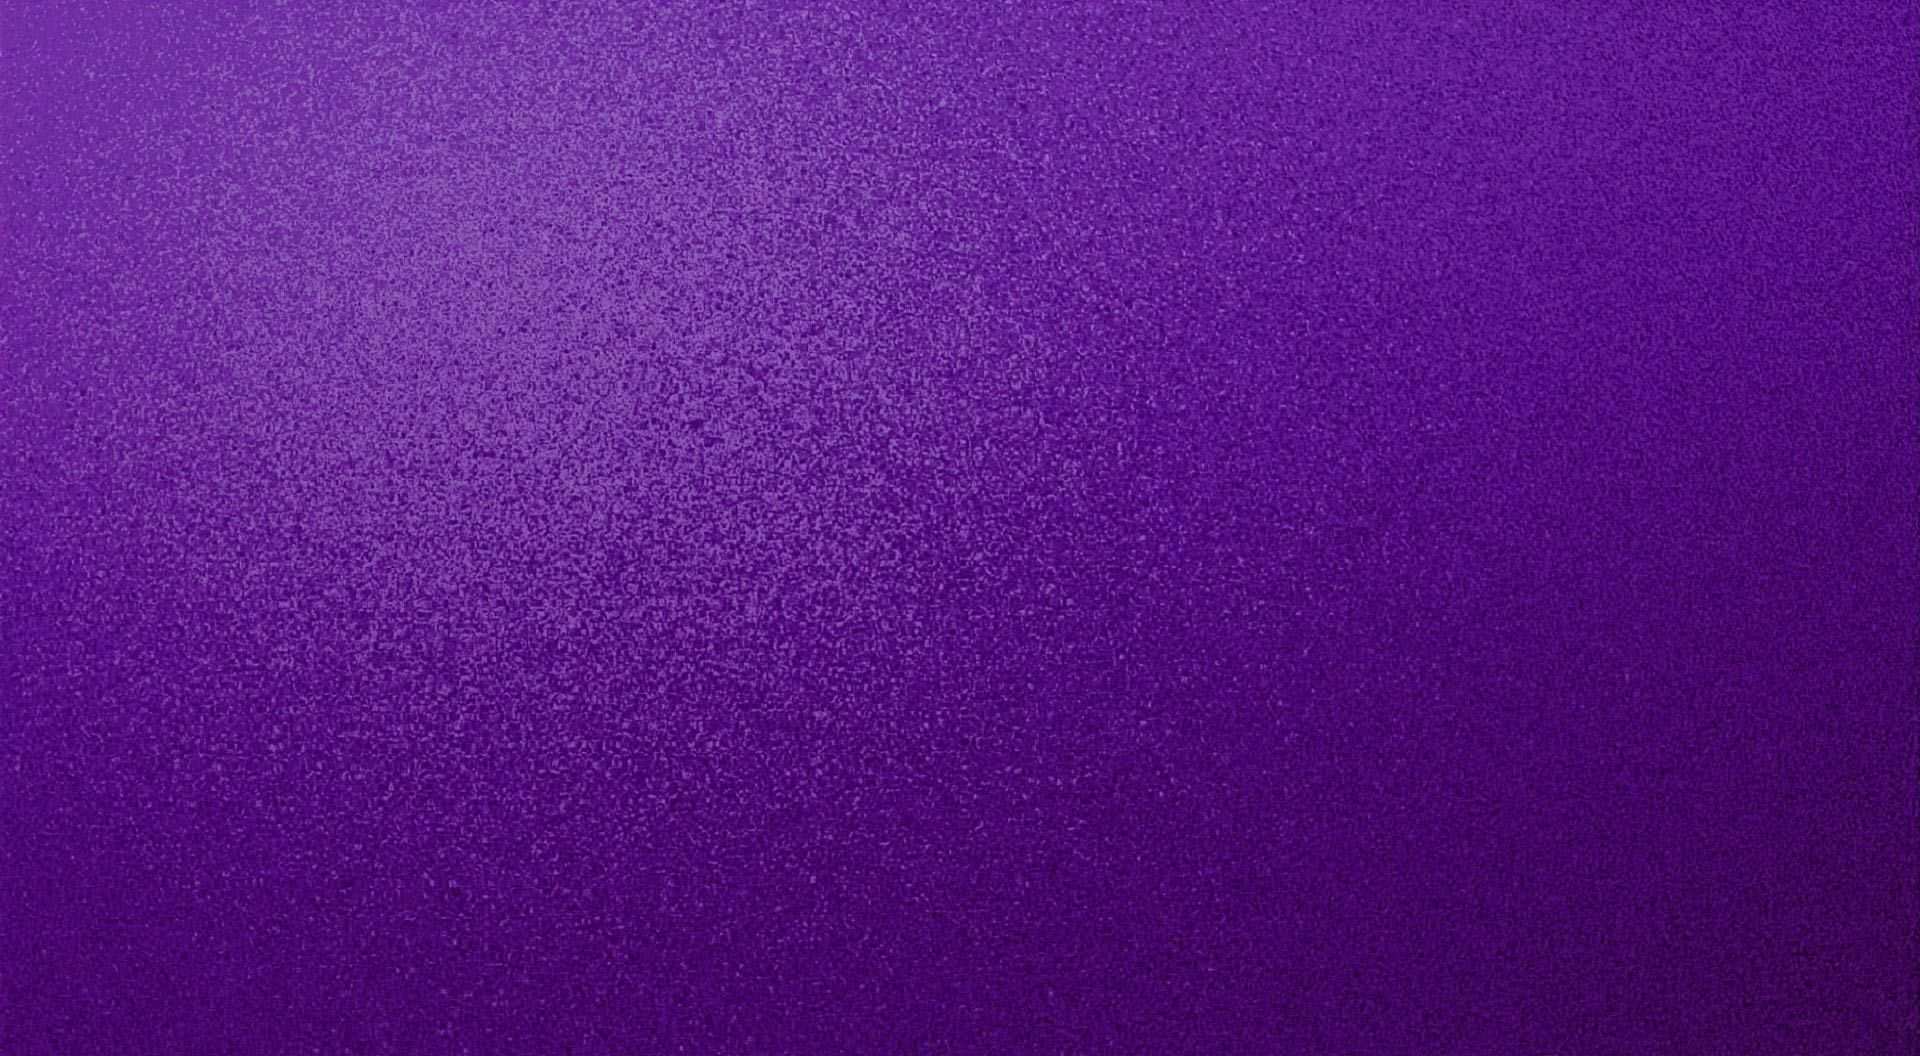 Cute Purple Background. Rosenbaum Eye And Laser Center